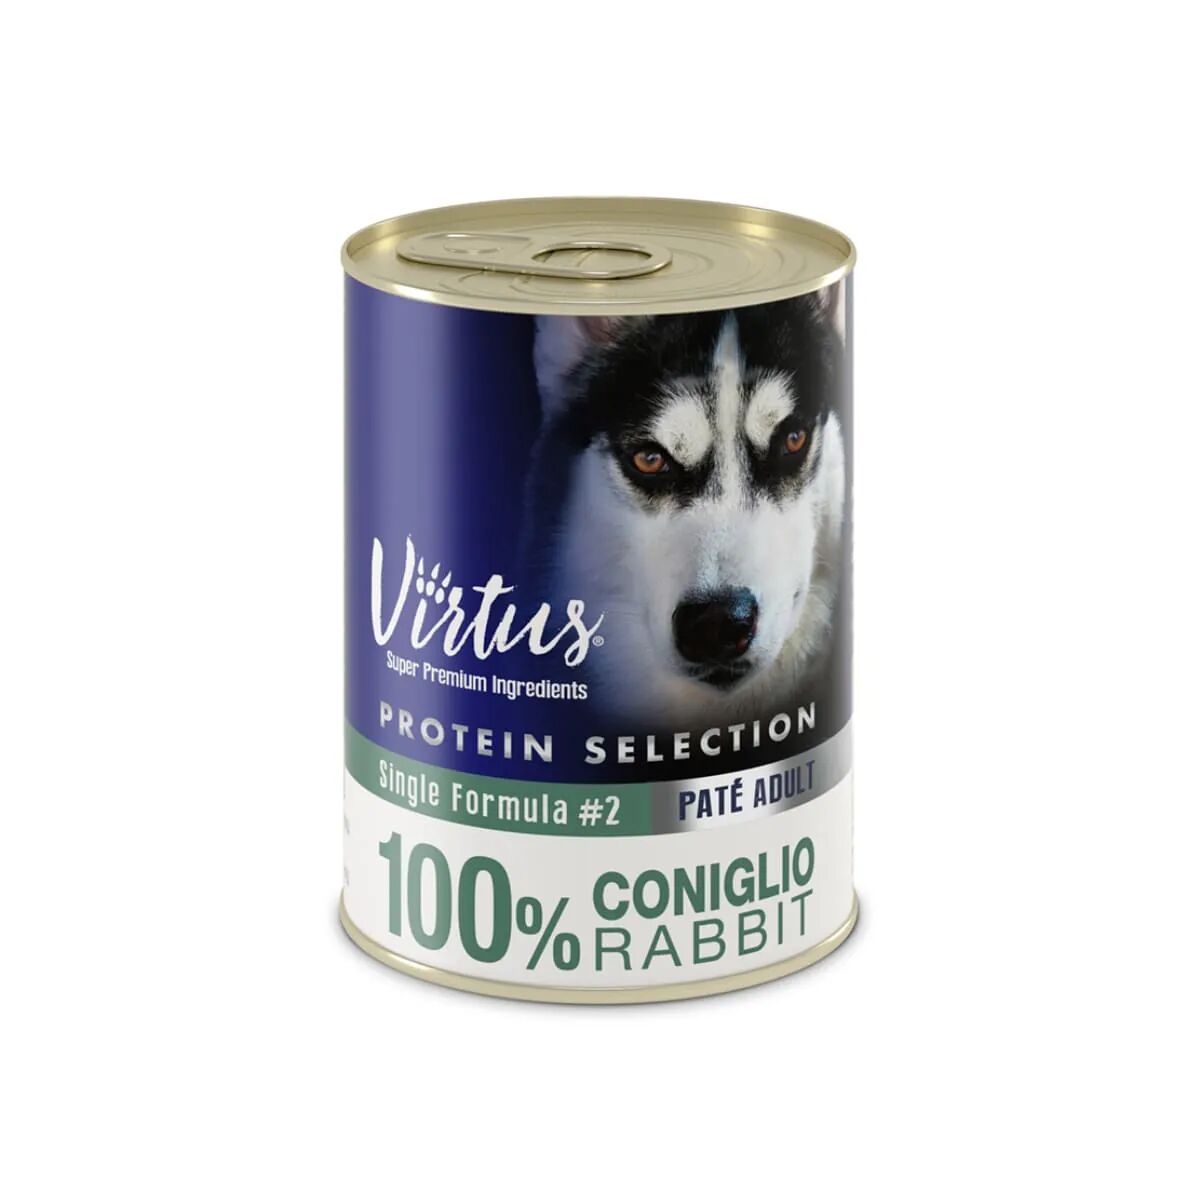 VIRTUS Dog Protein Selection Coniglio 400g 400G